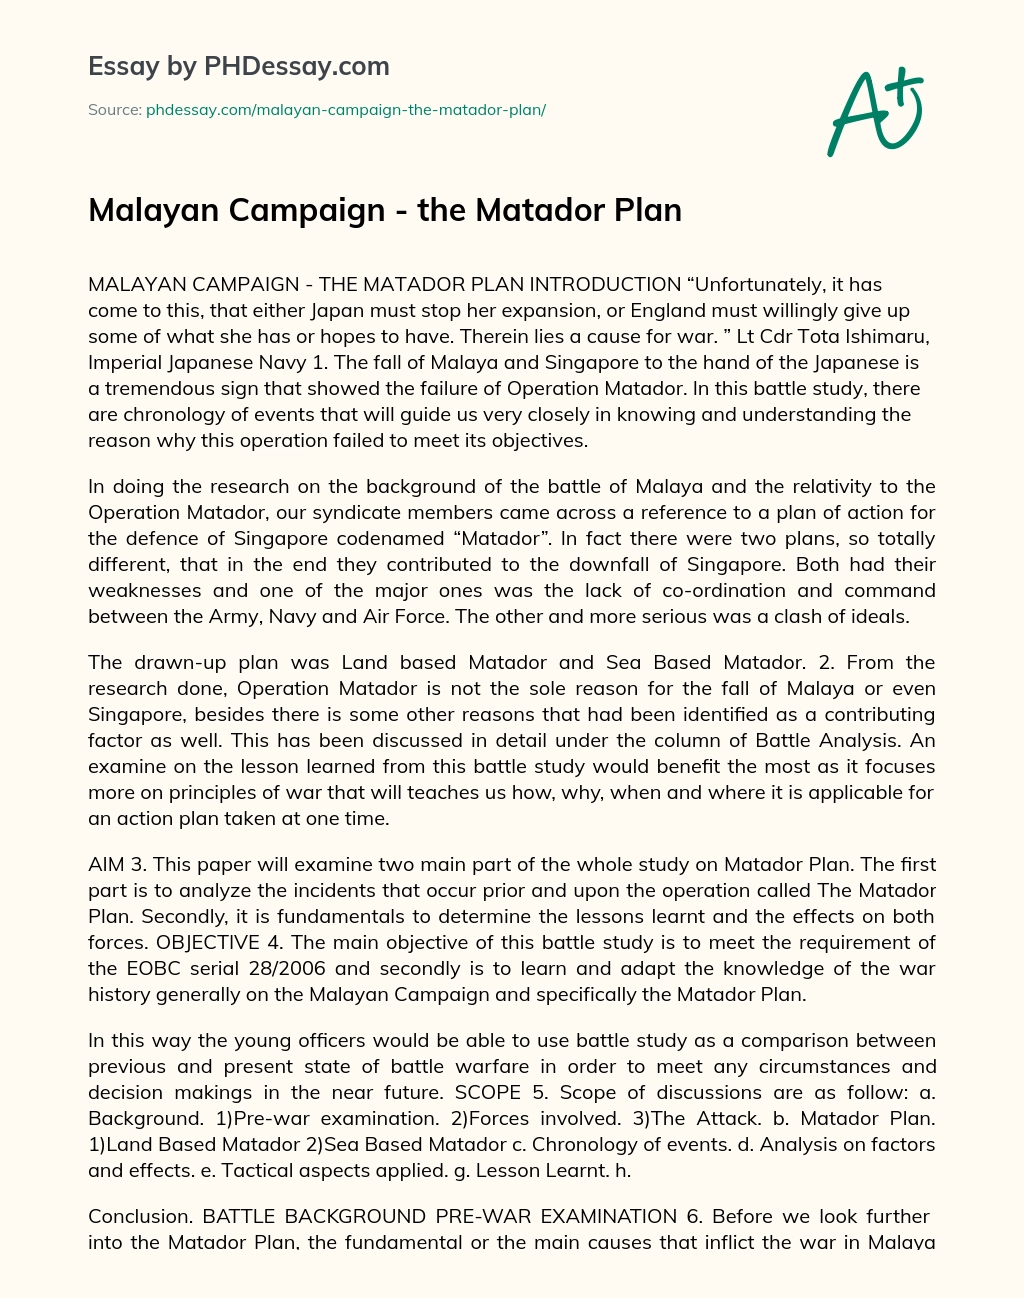 Malayan Campaign – the Matador Plan essay